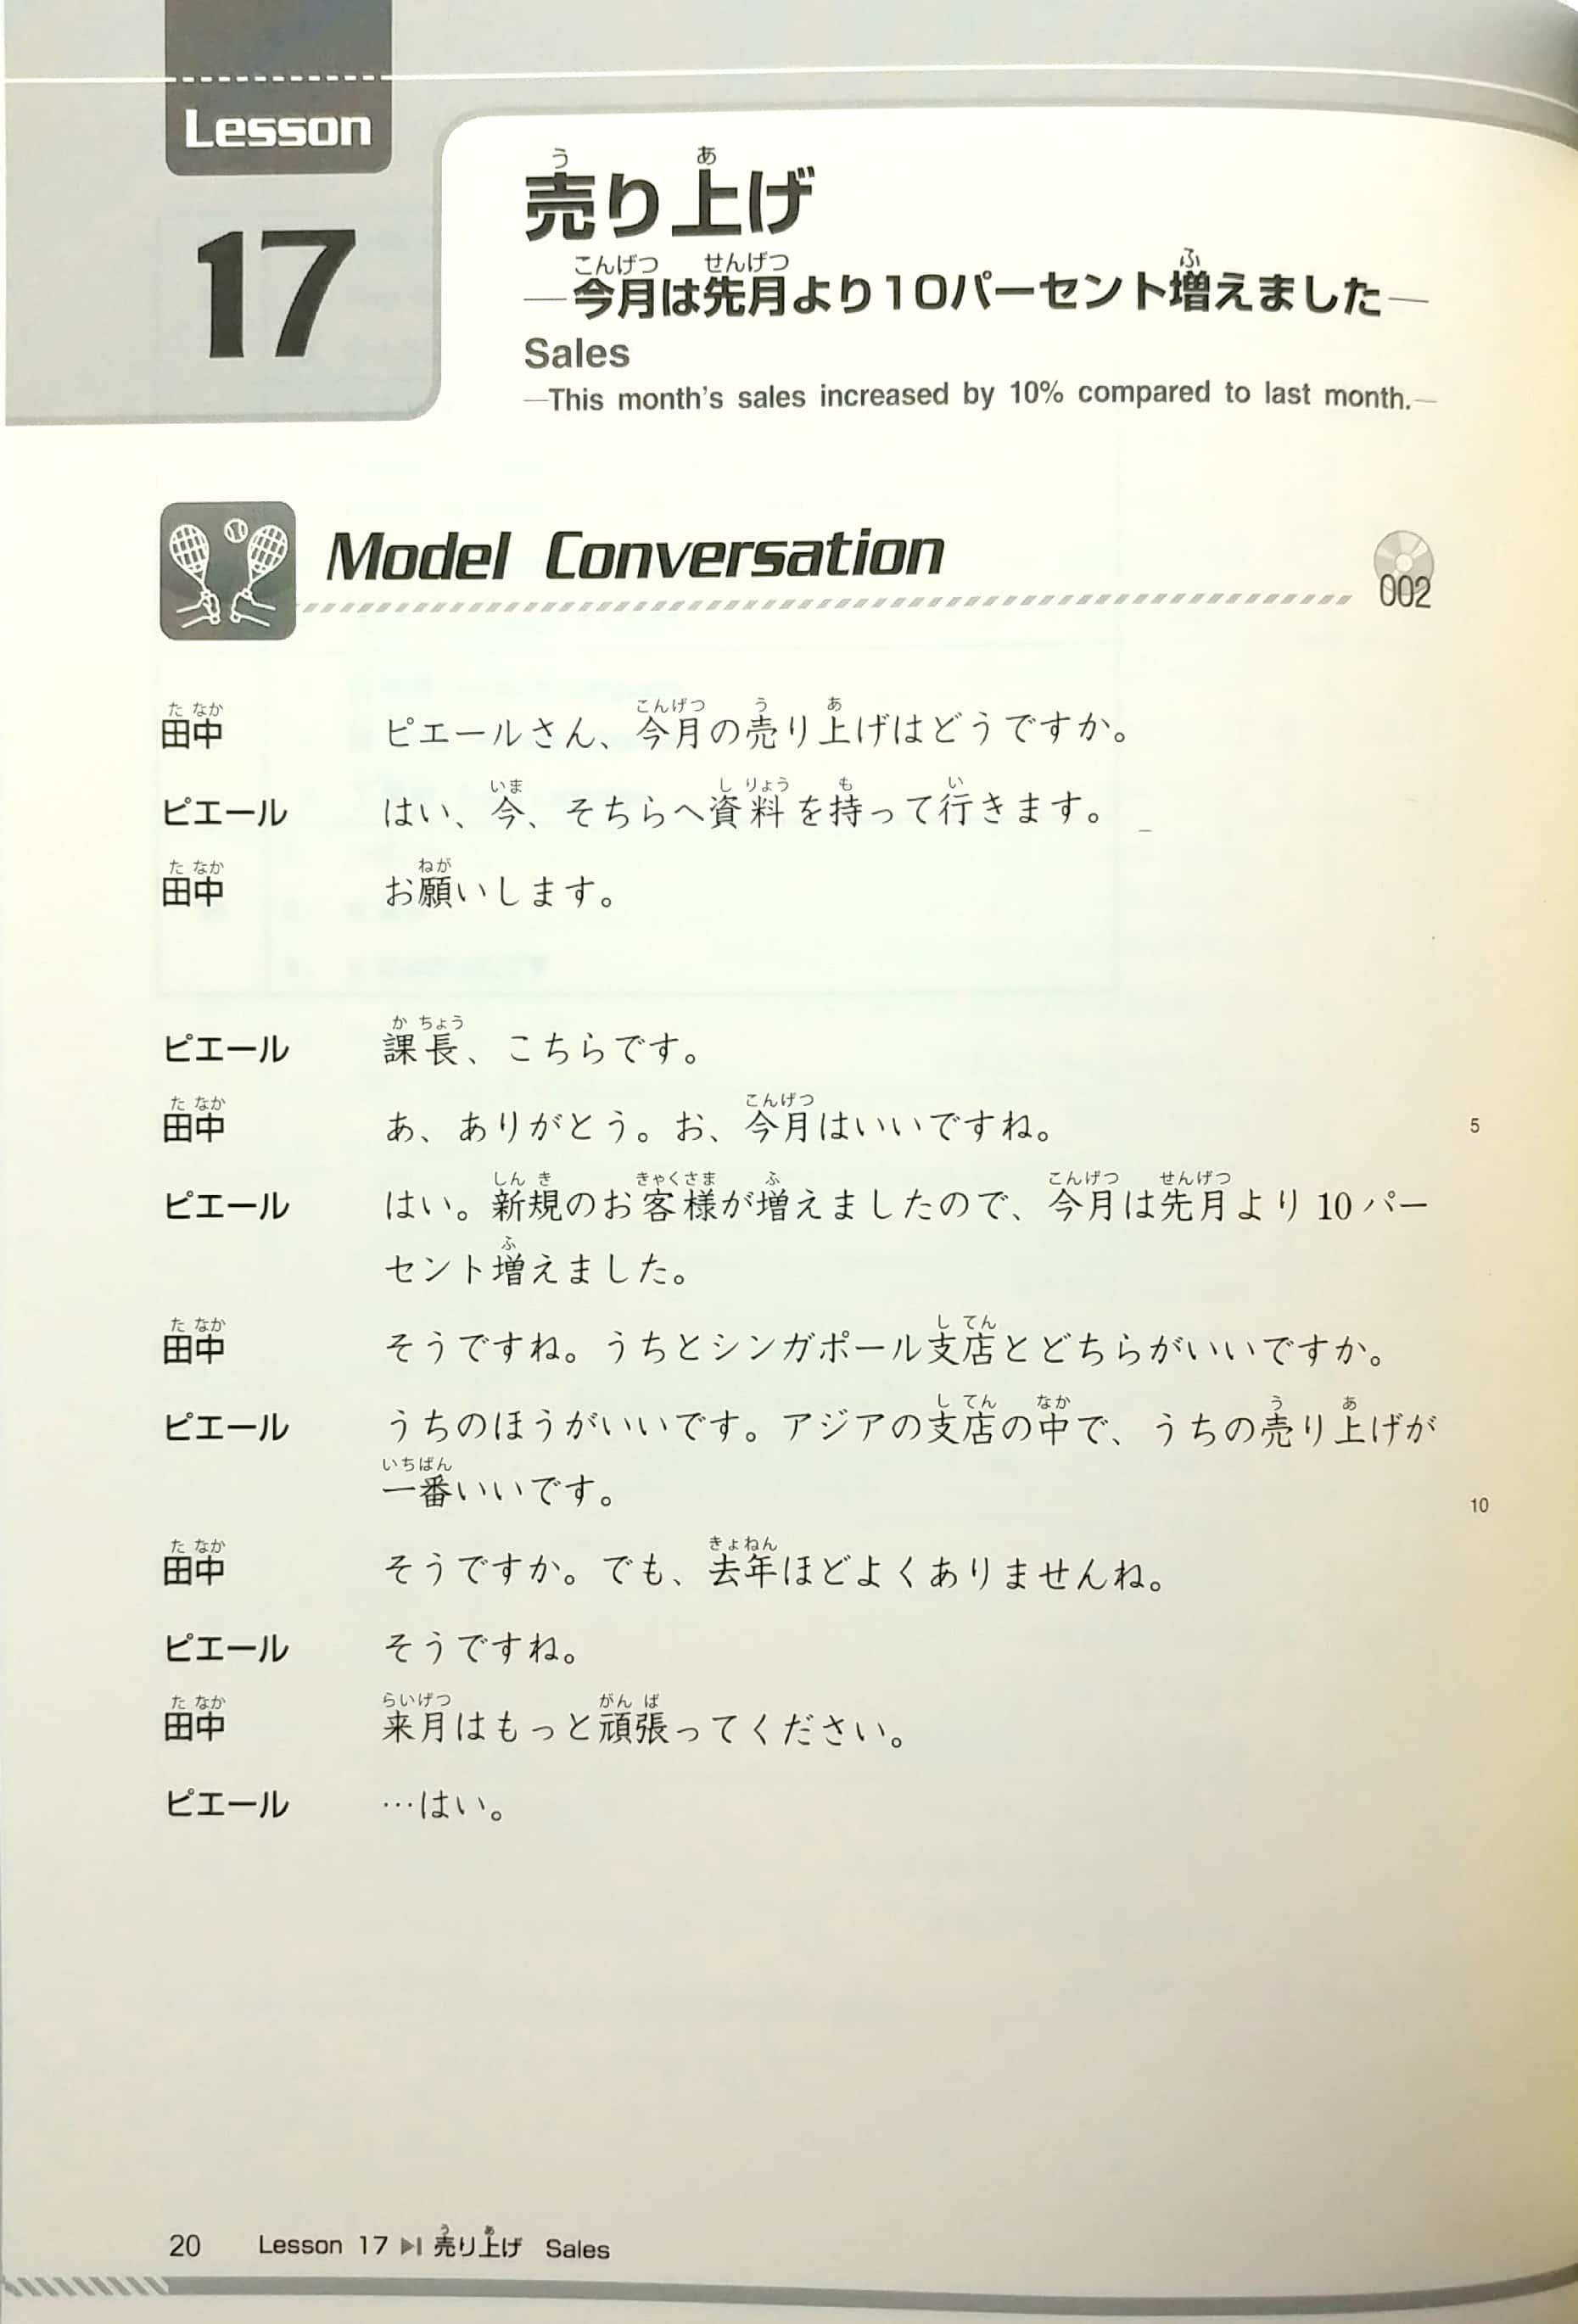 NIHONGO EXPRESS Practical Conversation in Japanese (Japanese Edition)